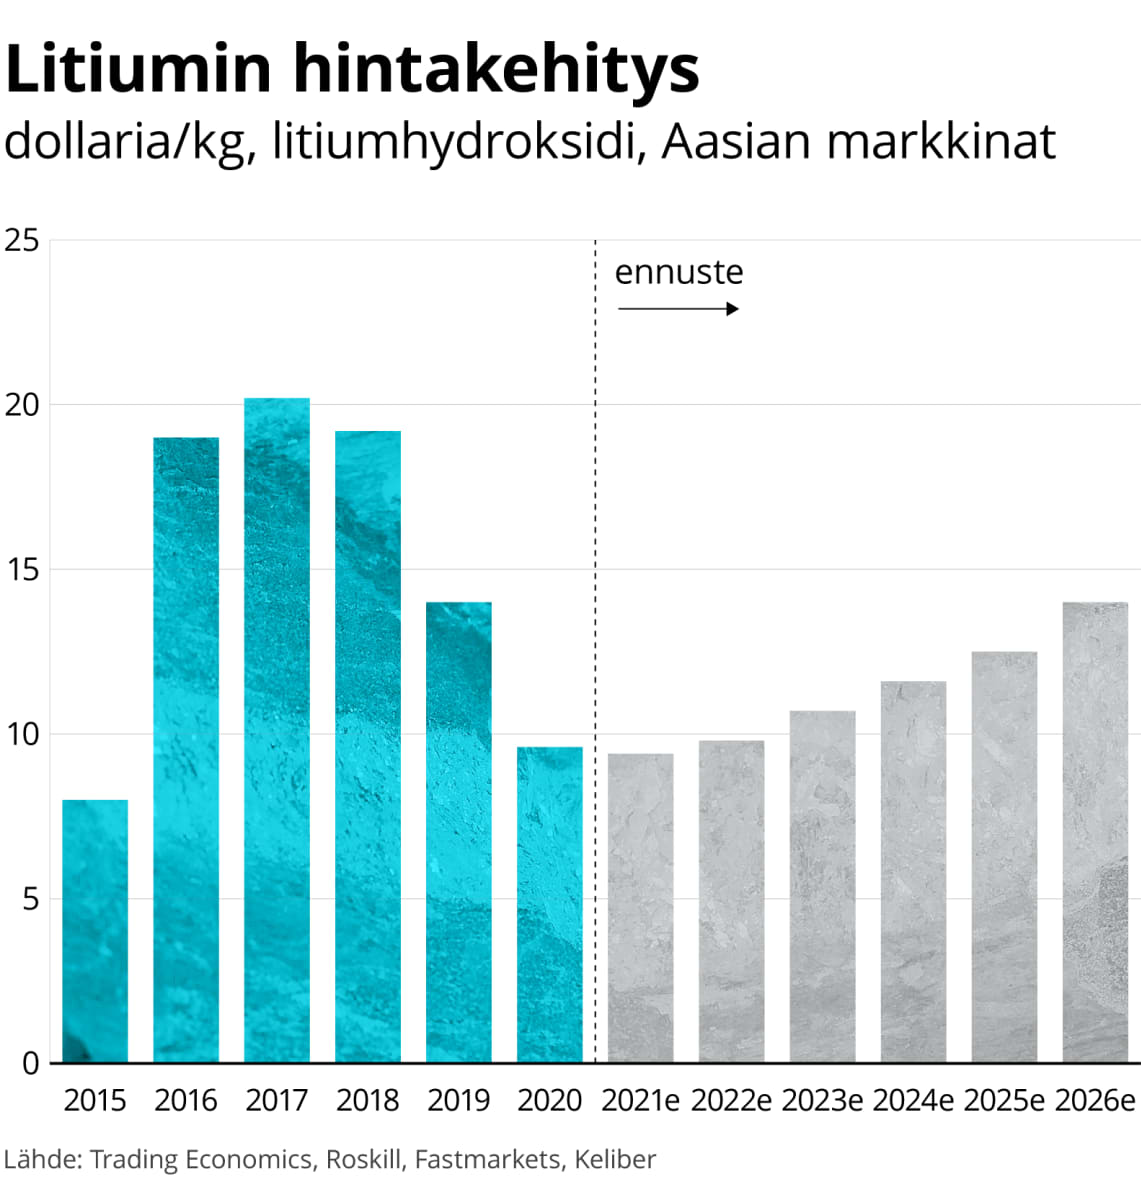 Litiumin hintakehitys 2015-2026